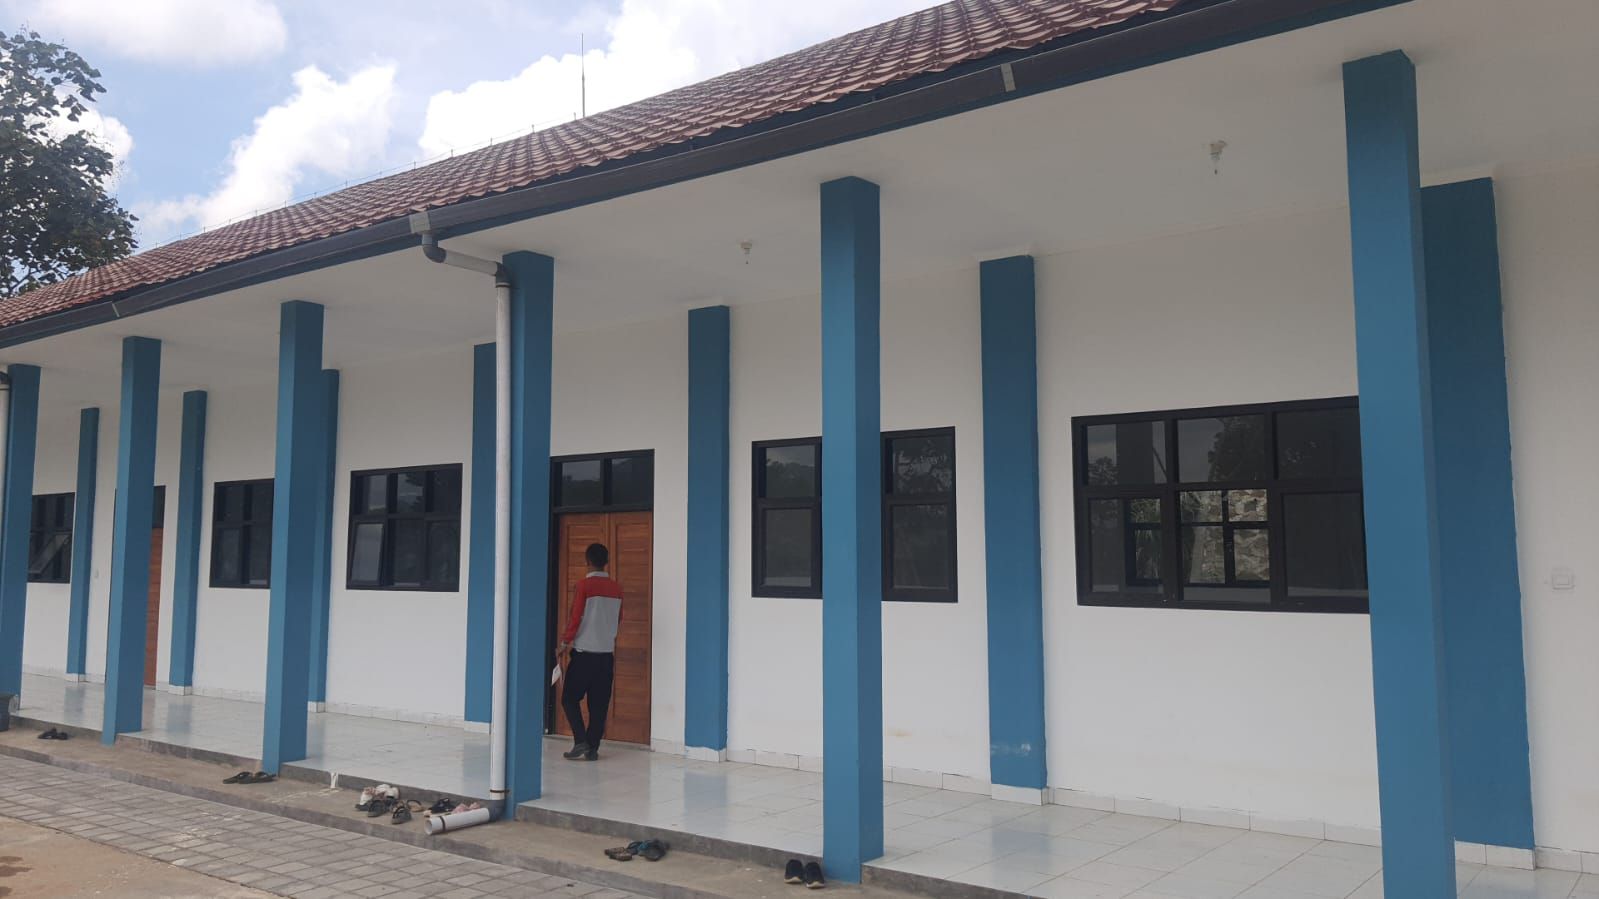 Terdapat 19 desa yang terkena dampak dari pembangunan PLTA Upper Cisokan Pumped Storage (UCPS), di antaranya 6 desa dari Kab. Bandung Barat